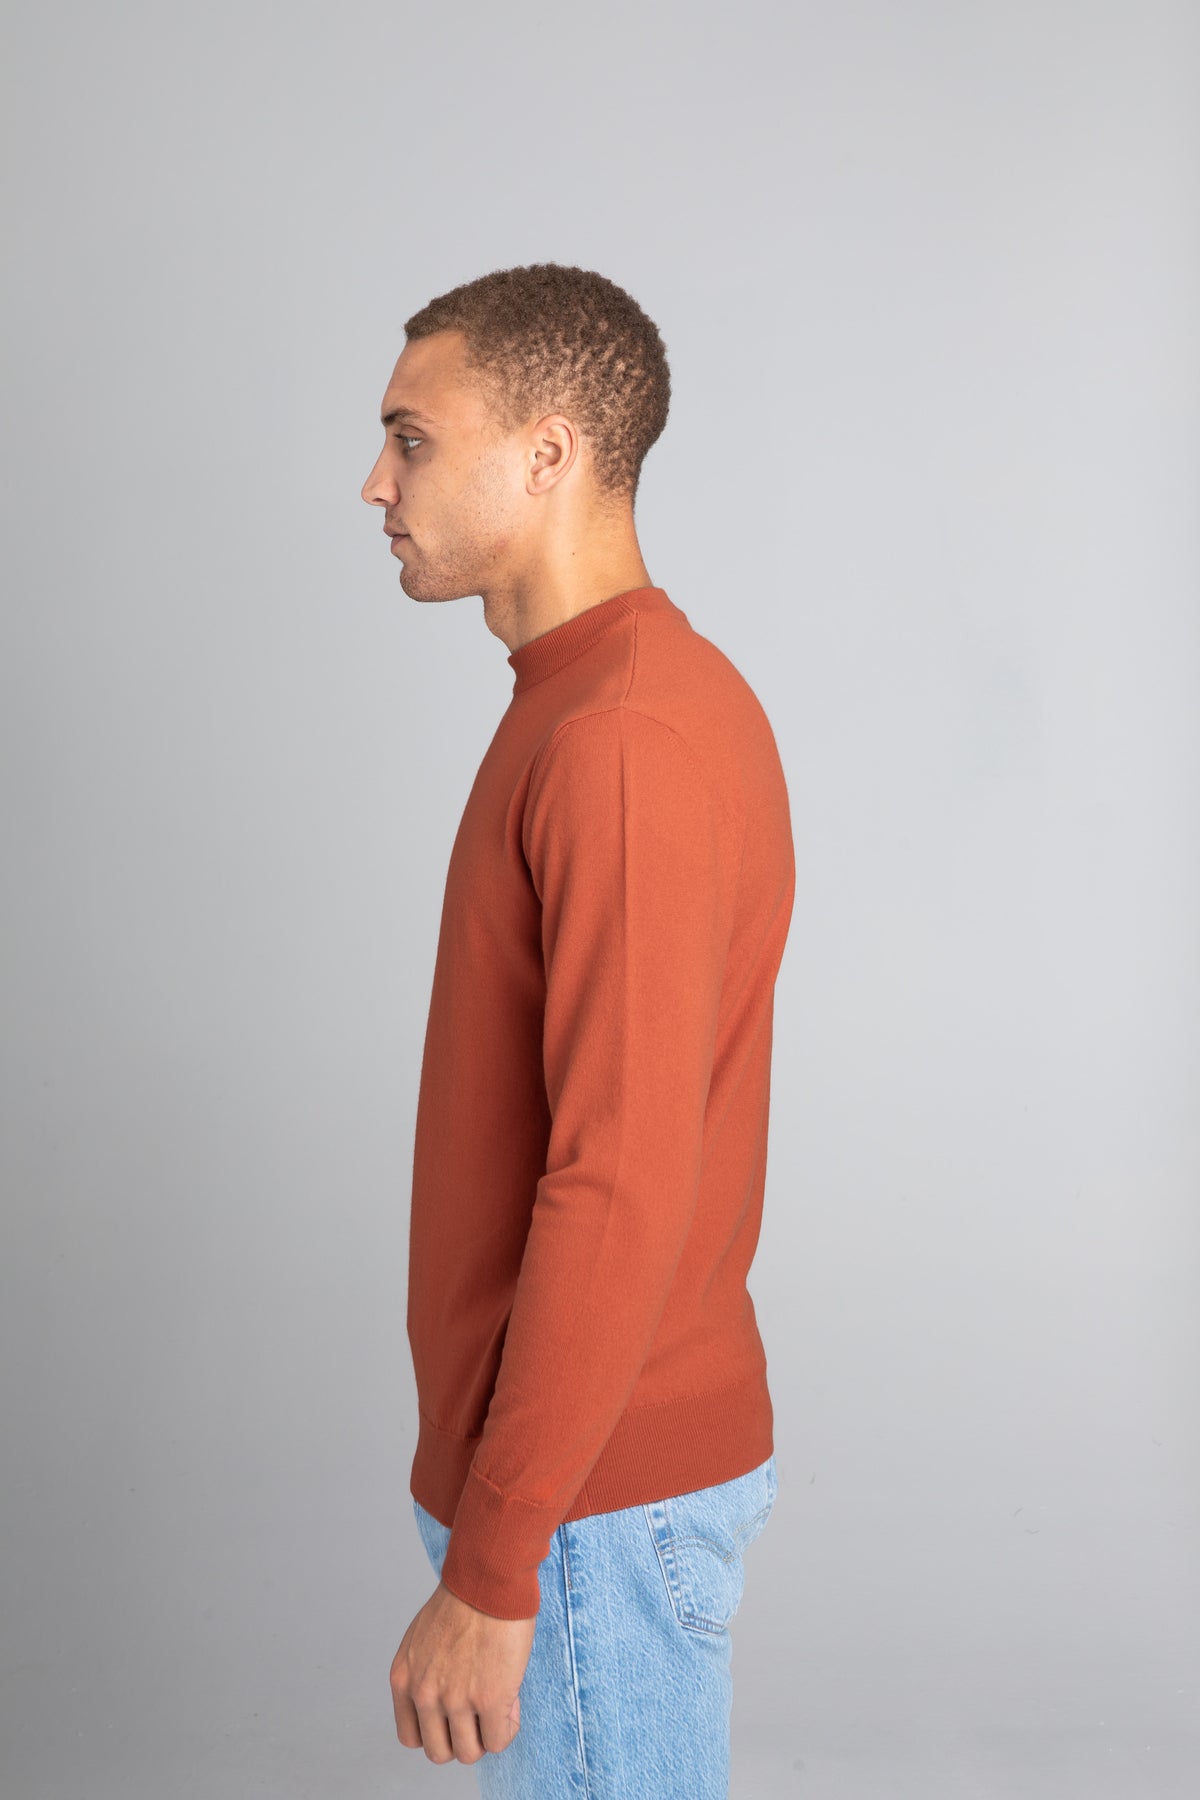 Model wearing The Merino Sweater lightweight Burnt Orange, left view - Unborn